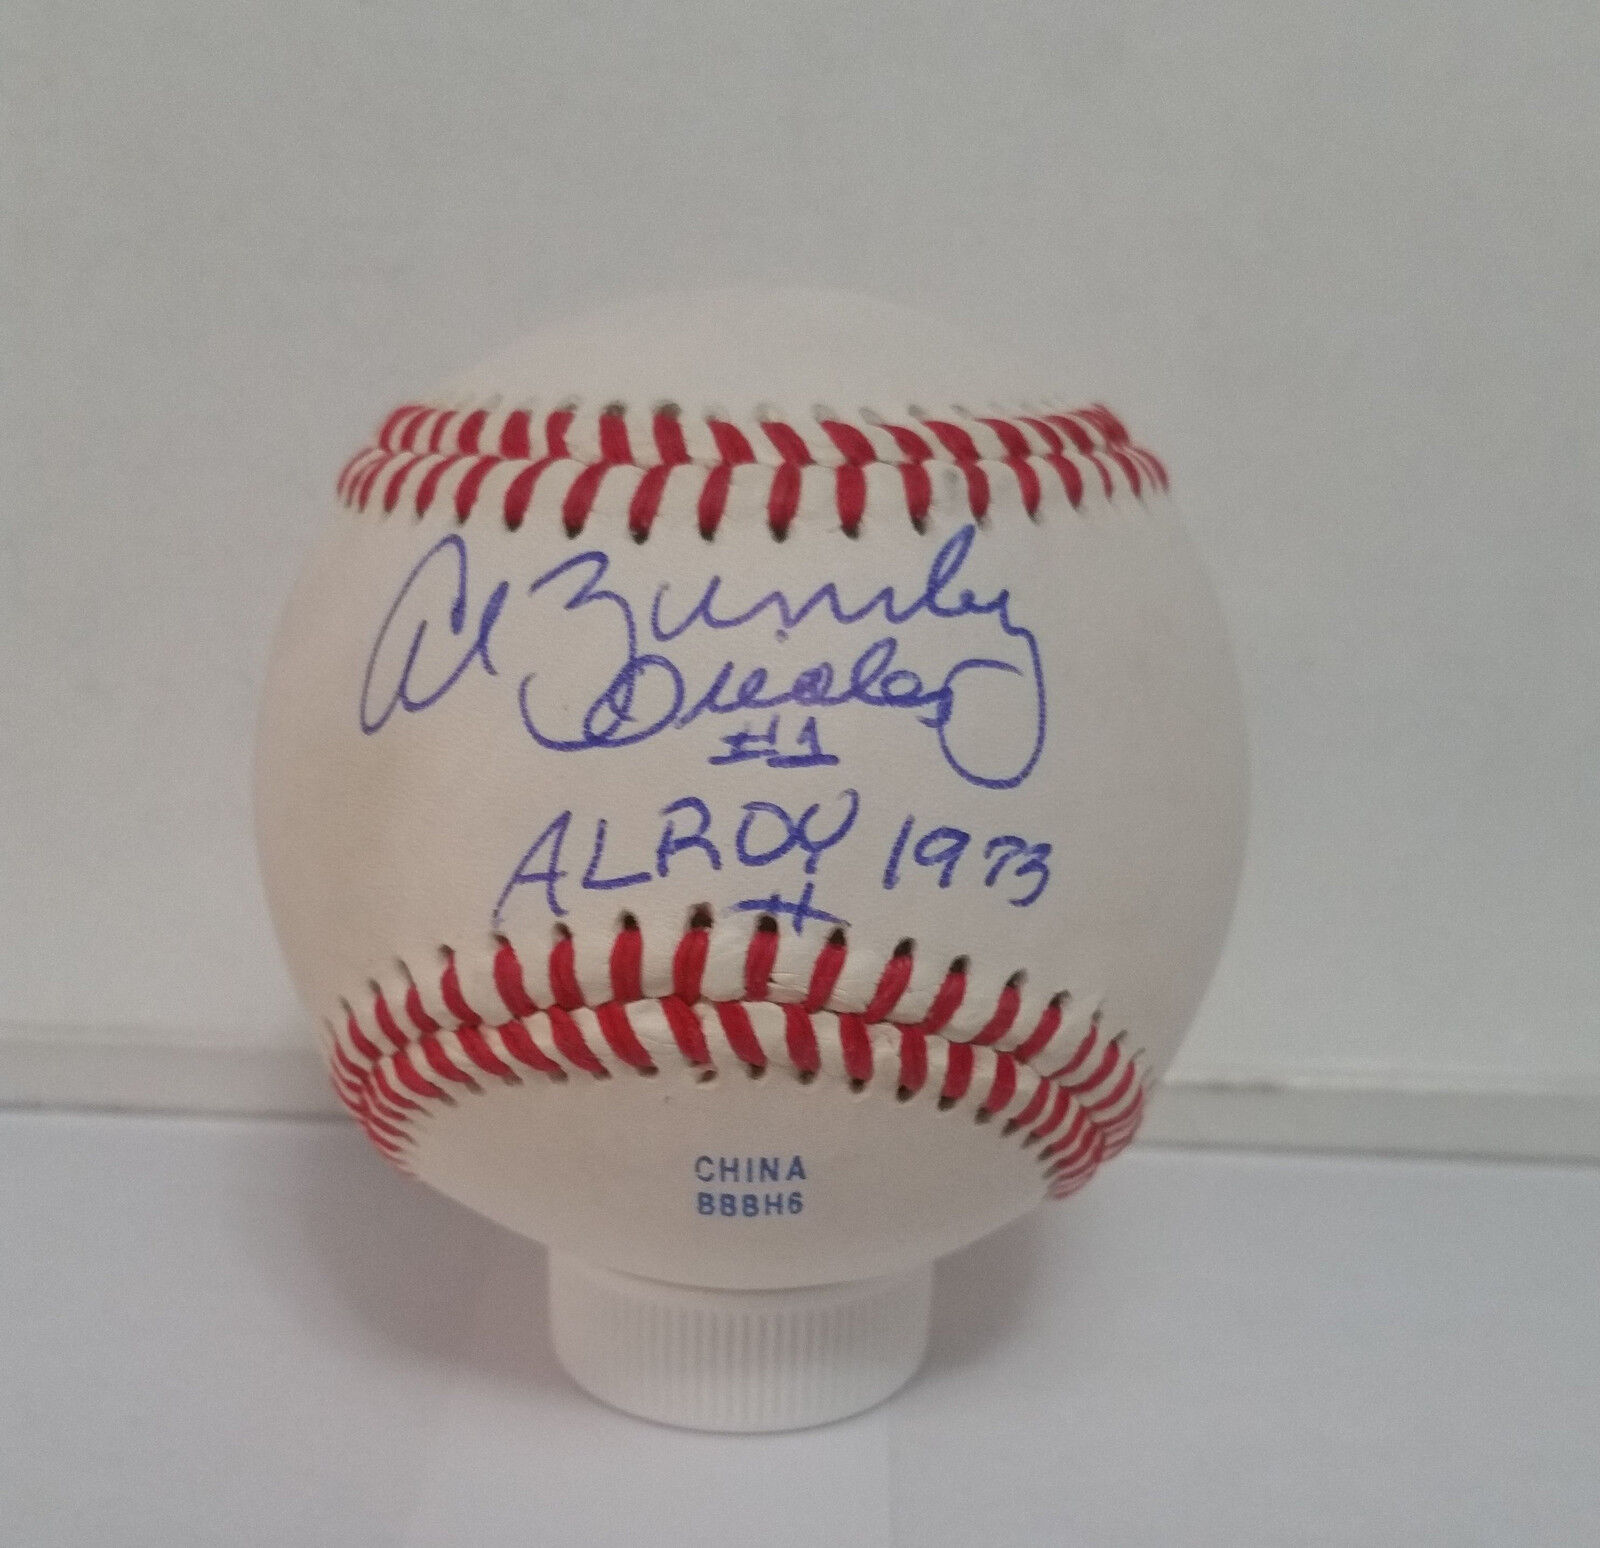 Al Bumbry Autographed Signed Baseball - w/COA MLB 1973 ROY Baltimore Orioles WSC